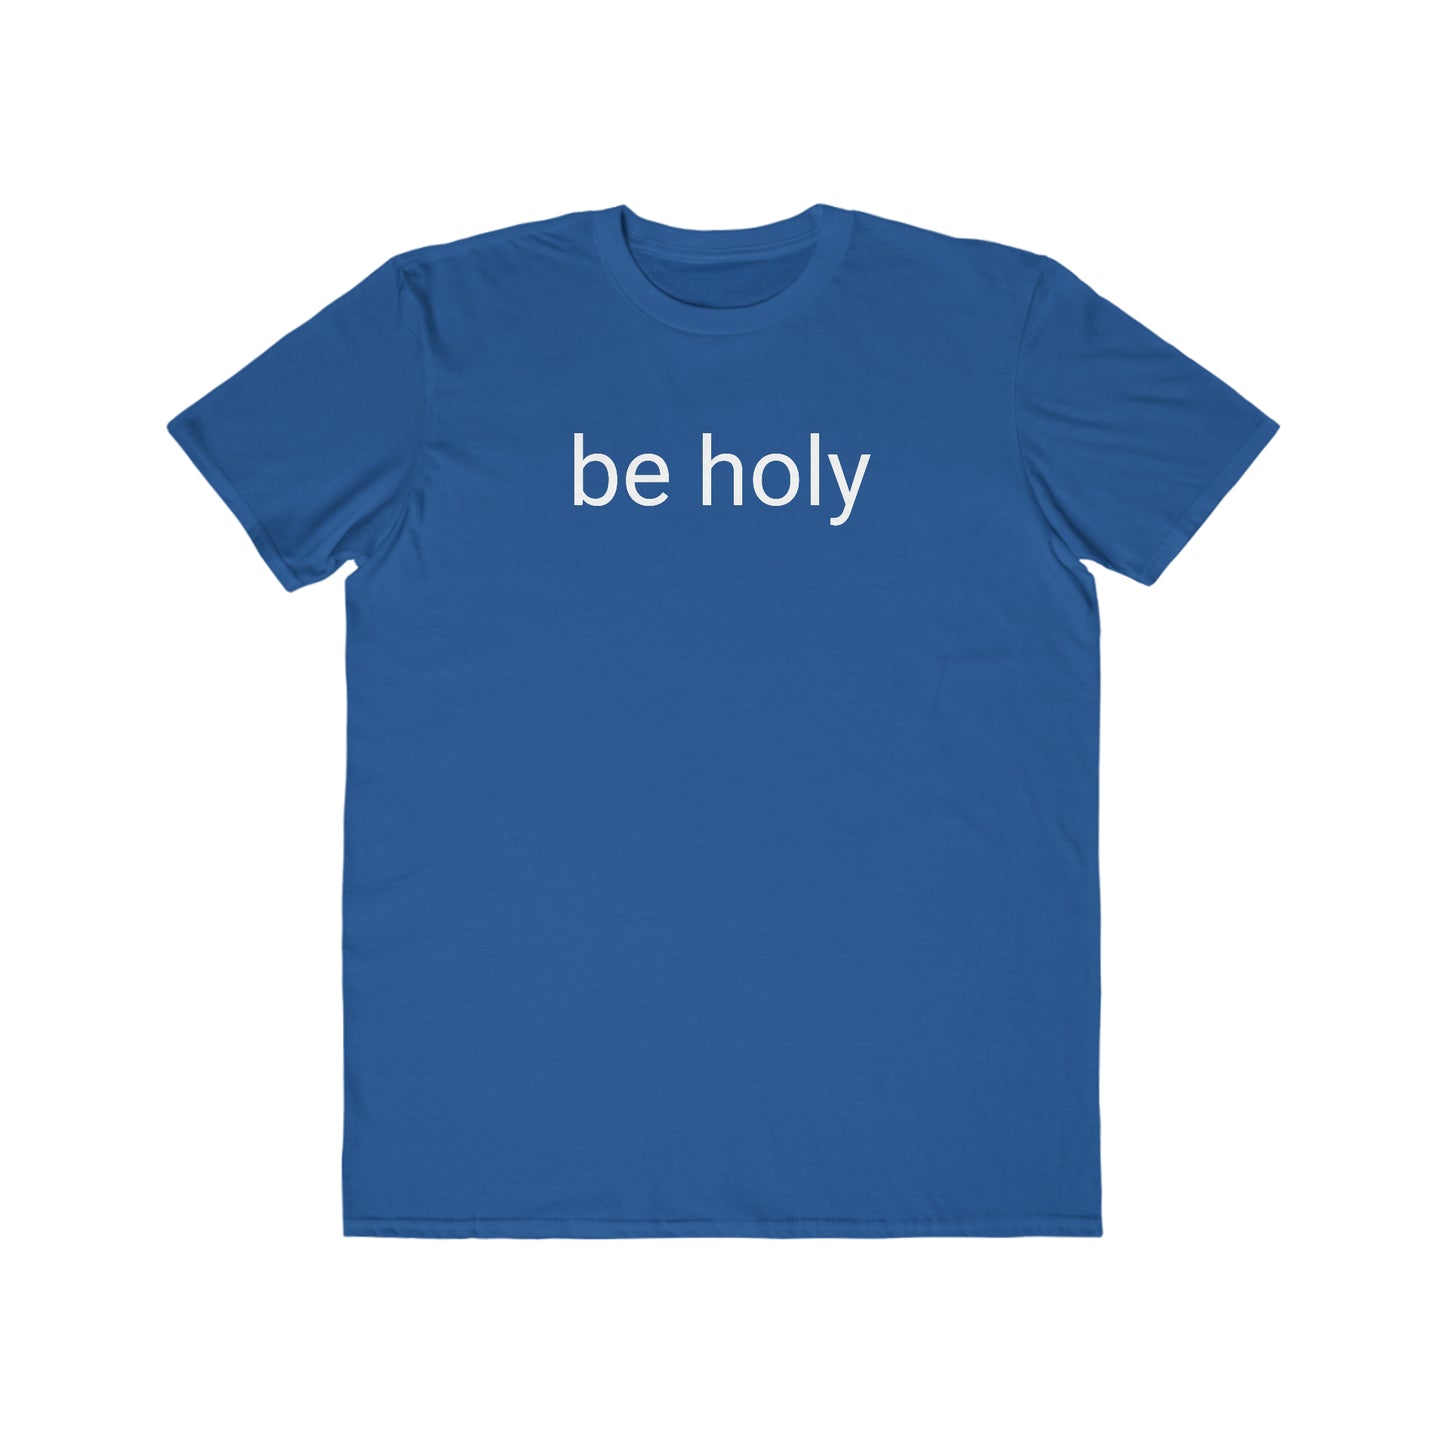 Be Holy - Men's Lightweight Fashion Tee